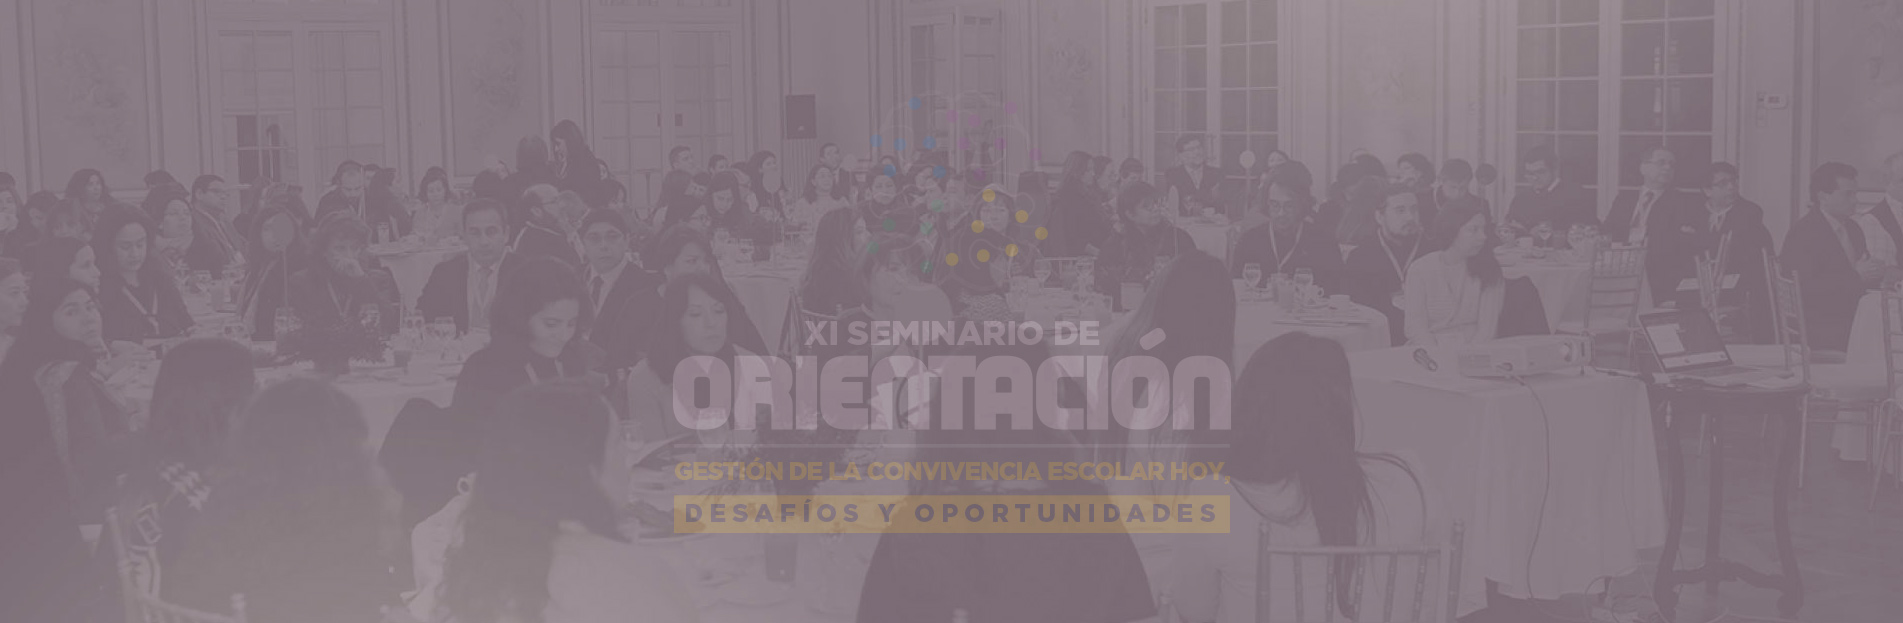 bg_seminario2 (1)